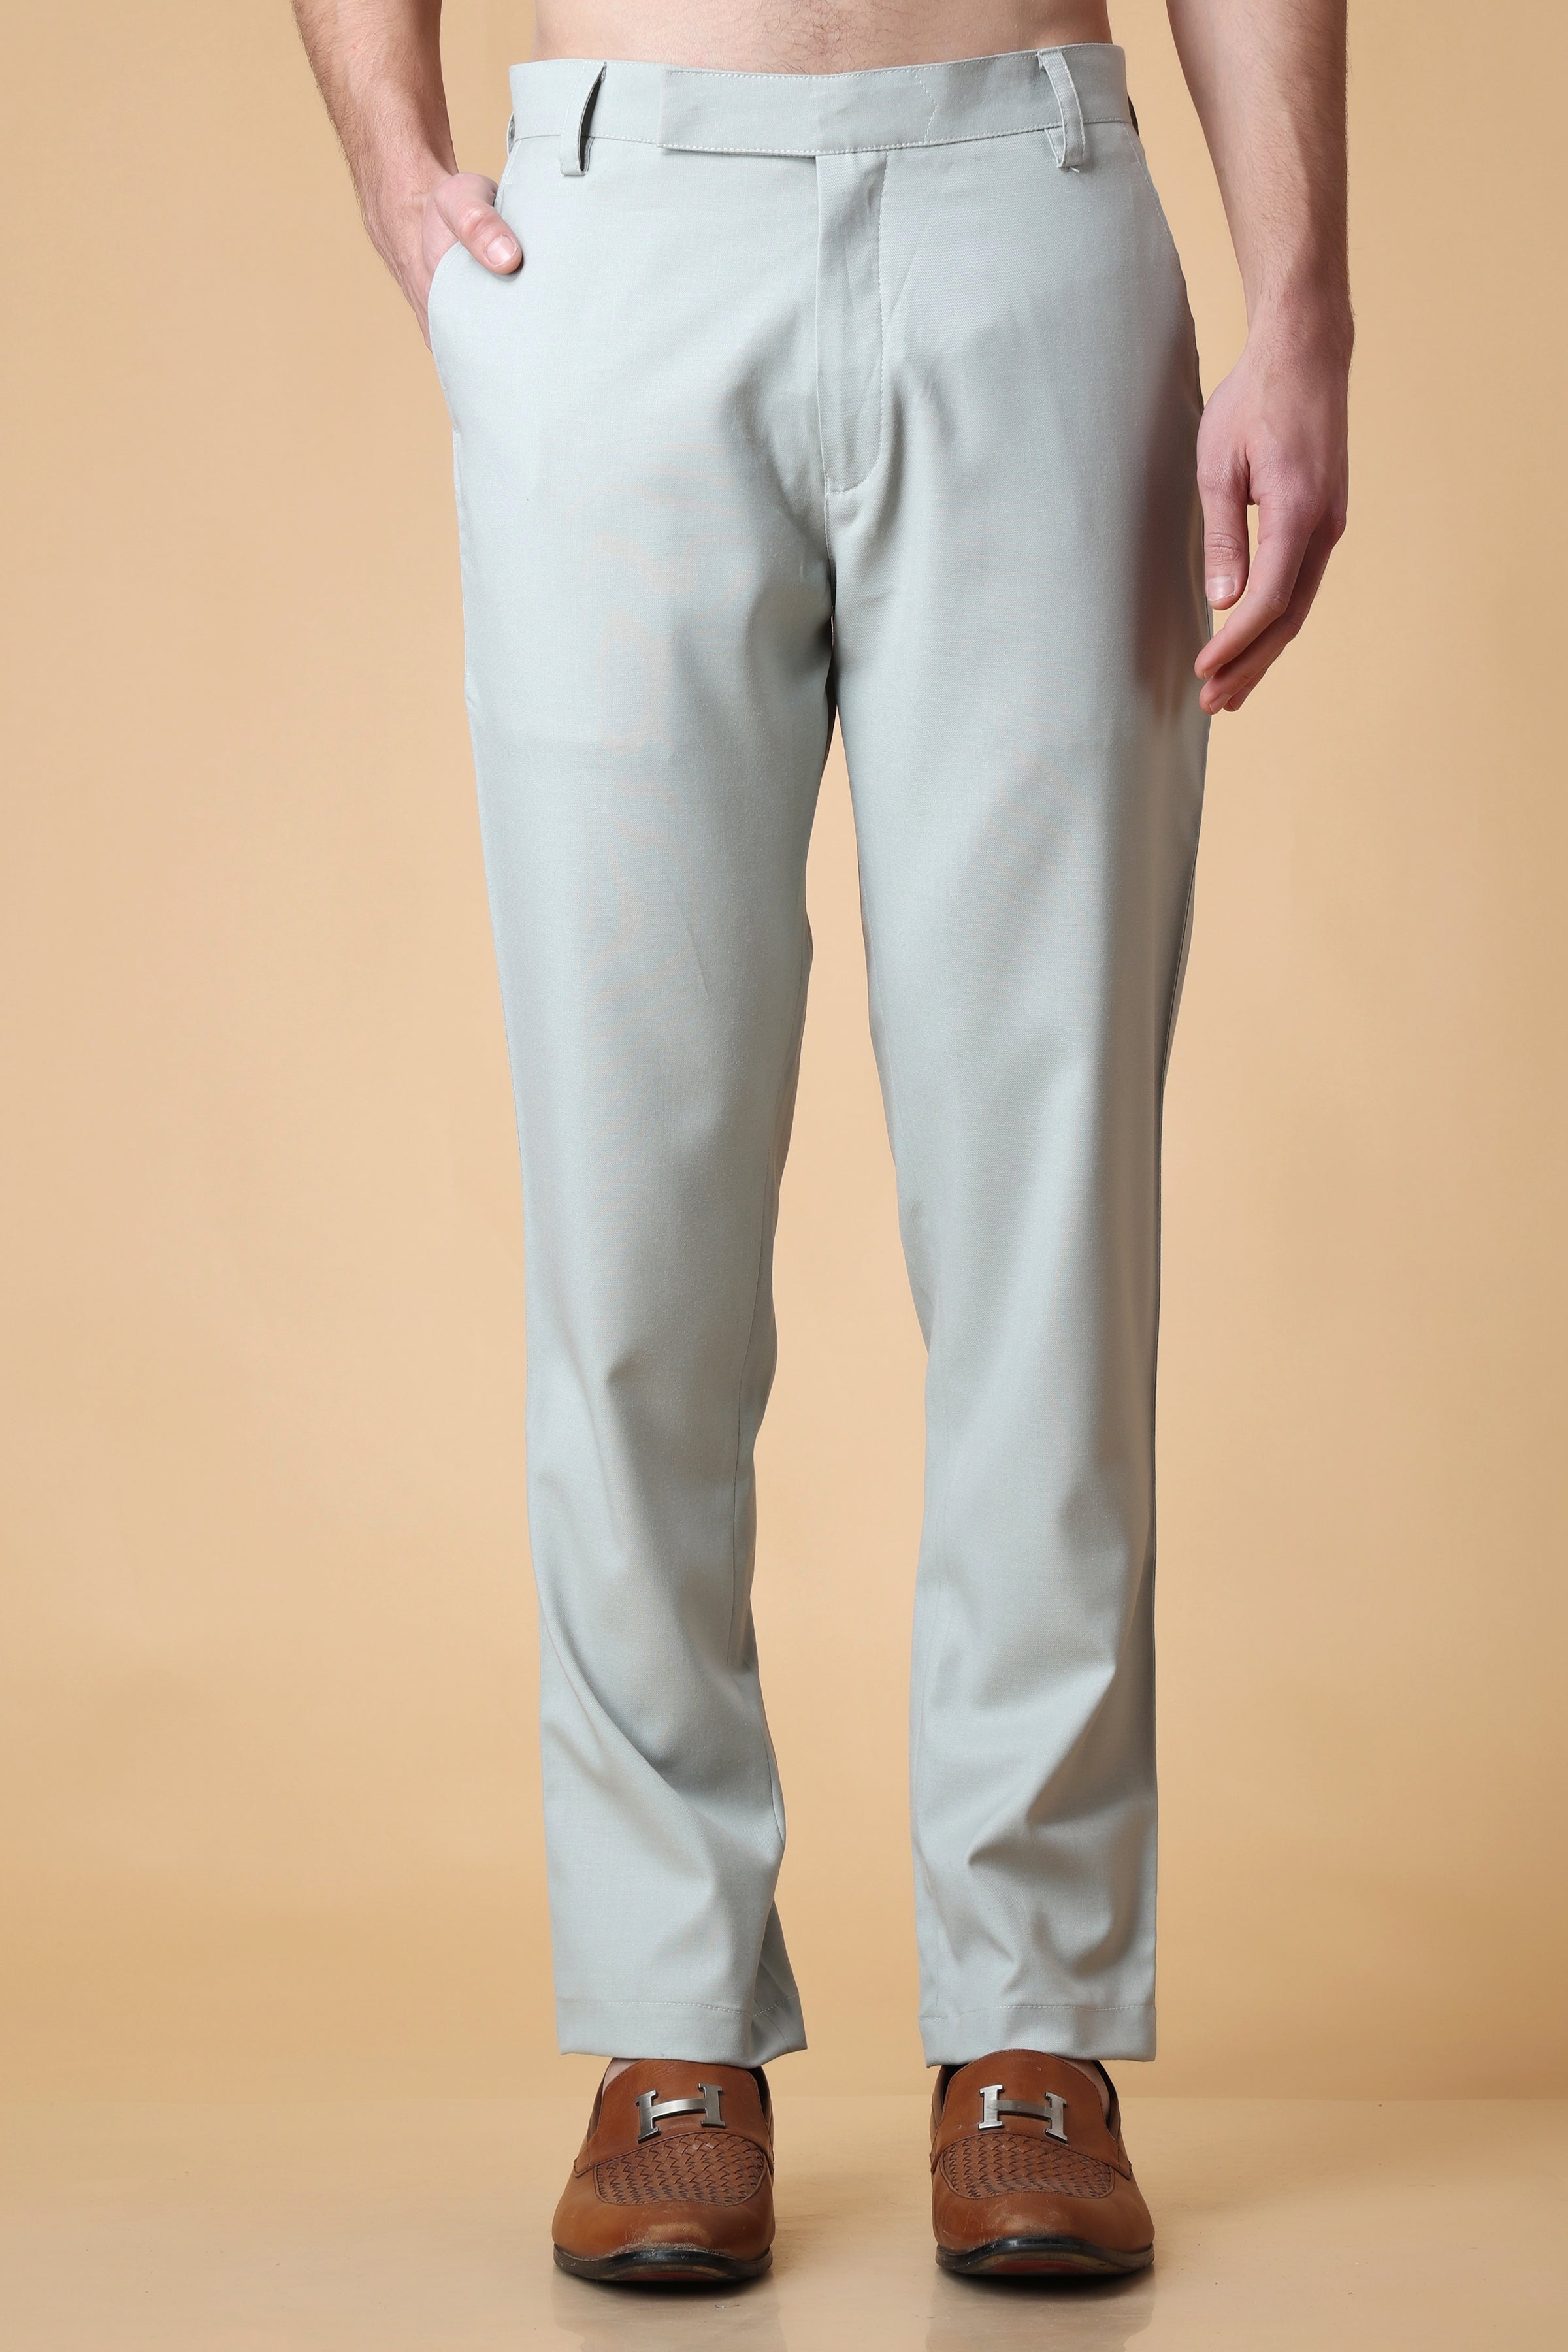 Buy VAN HEUSEN Grey Womens 4 Pocket Solid Formal Pants  Shoppers Stop